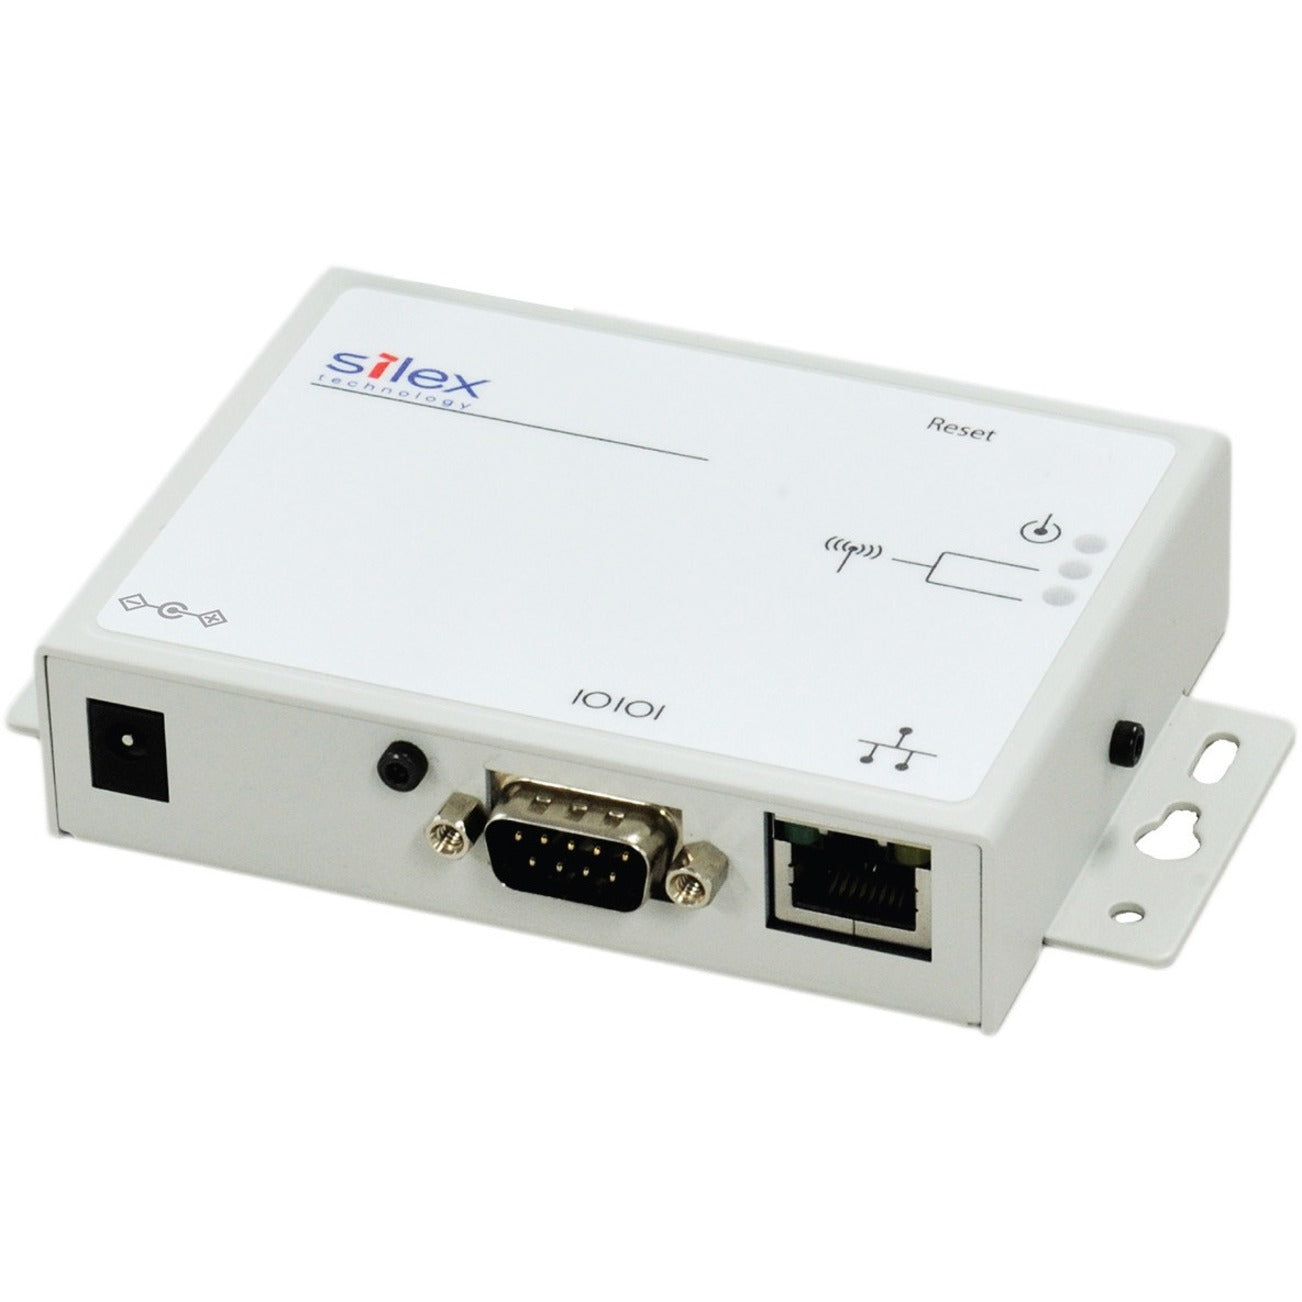 Silex SD-300-US Wired Serial Server, 2 Year Warranty, Fast Ethernet, 10/100Base-TX